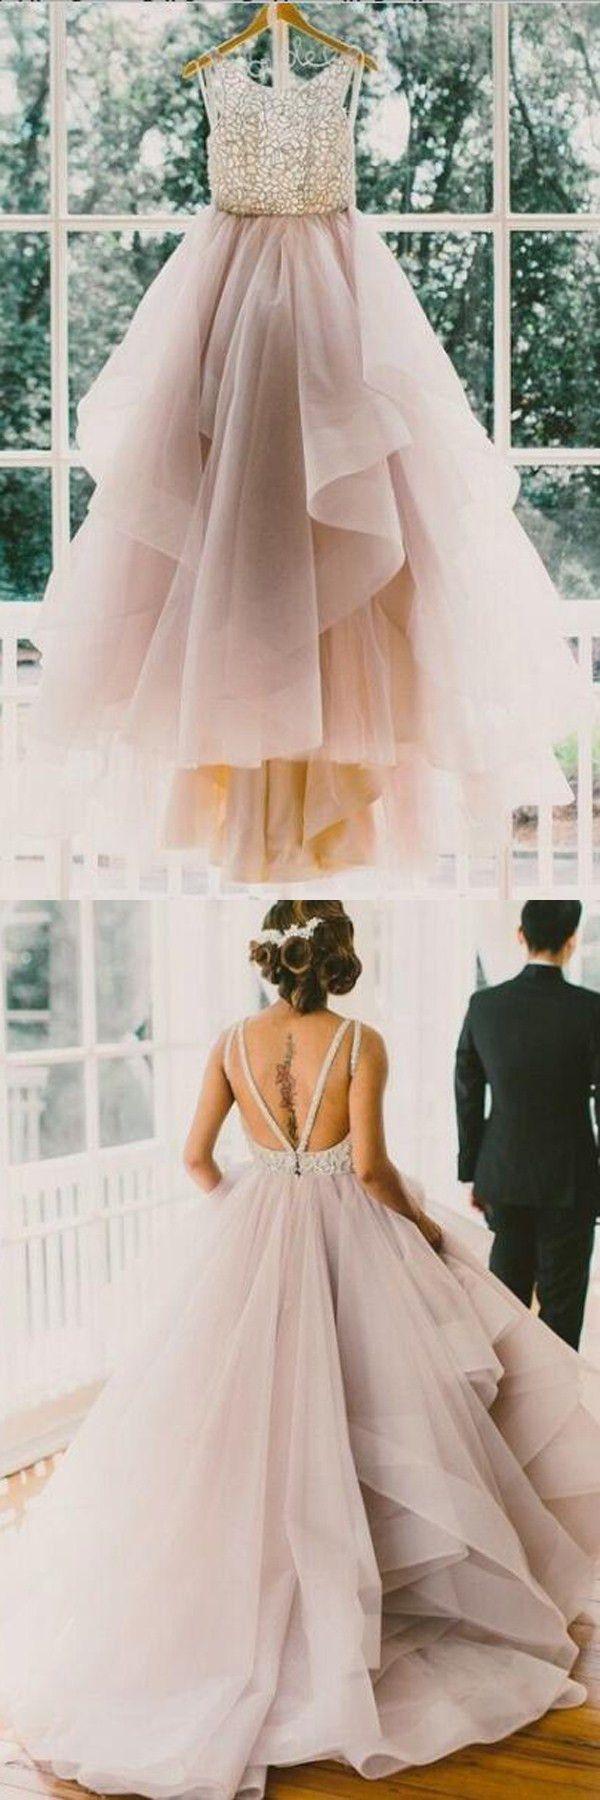 Hochzeit - The Perfect Fairytale Dress